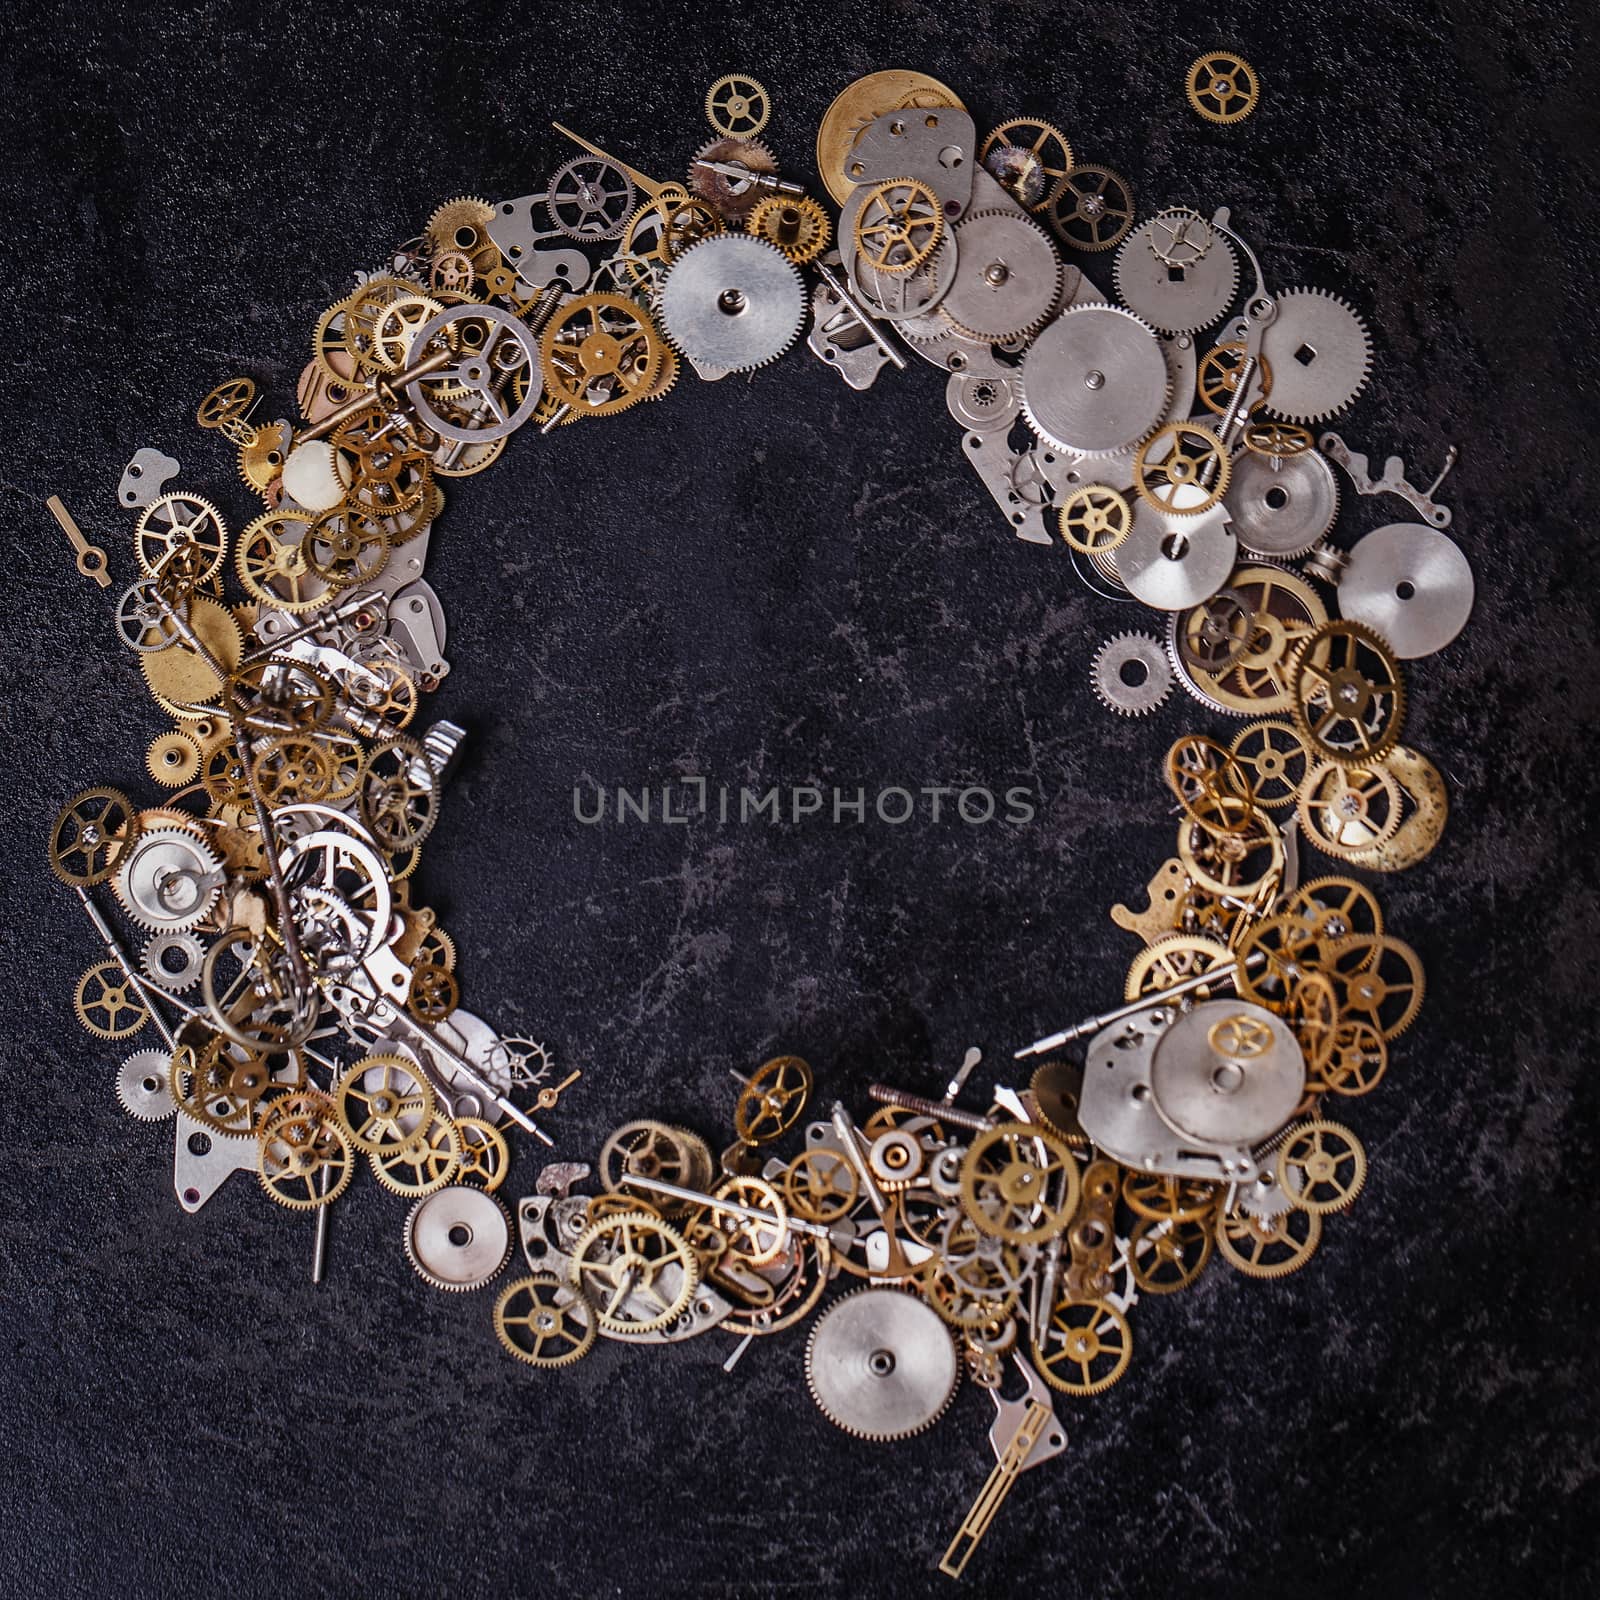 Gears on the table by rufatjumali